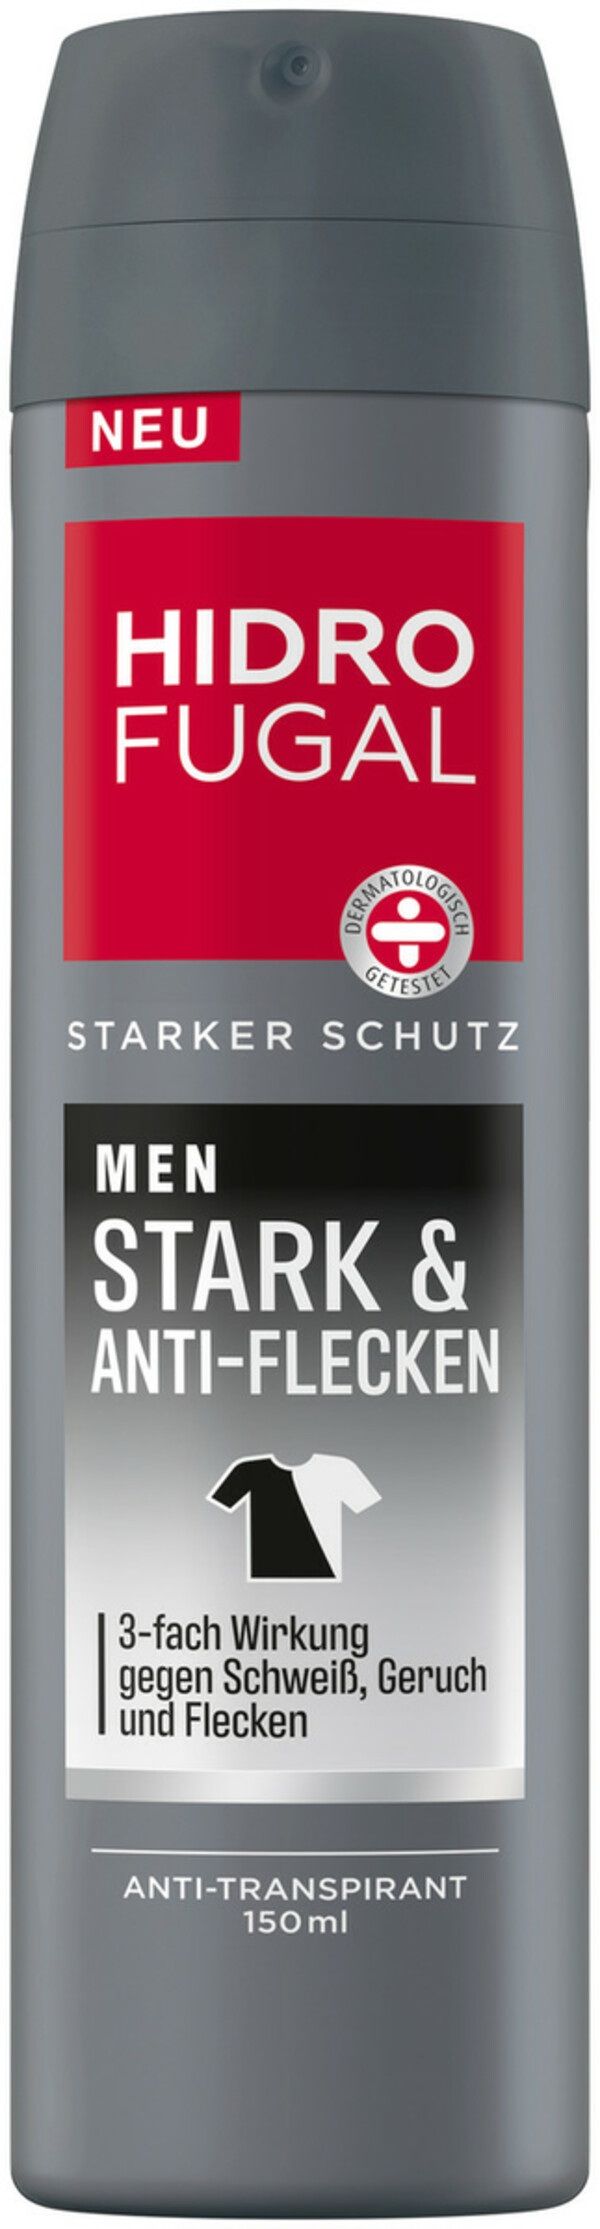 Bild 1 von Hidrofugal Men Anti-Transpirant Stark & Anti-Flecken 150ML